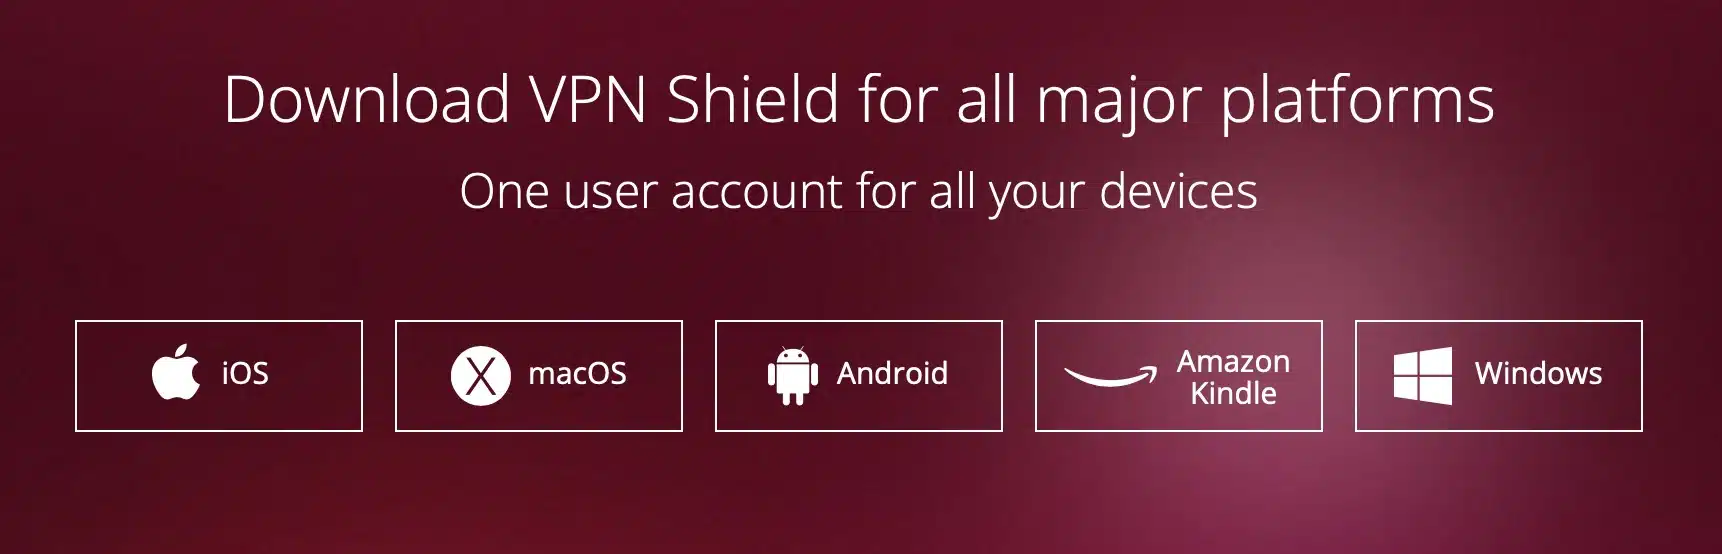 VPN Shield - PLatforms